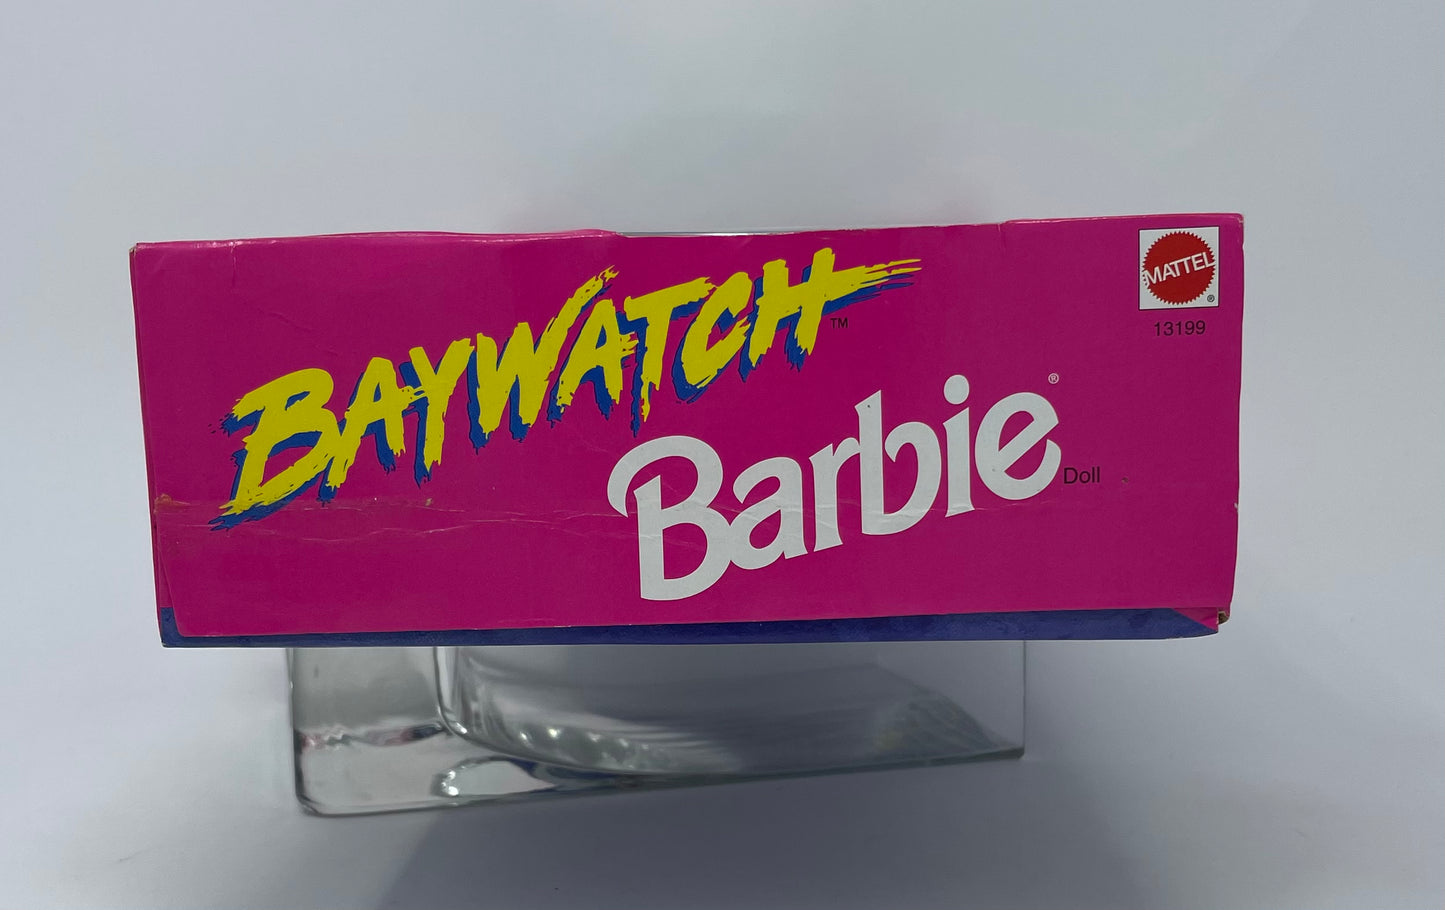 BAYWATCH BARBIE - BLONDE - WITH DOLPHIN #13199 - MATTEL 1994 (2 OF 2)